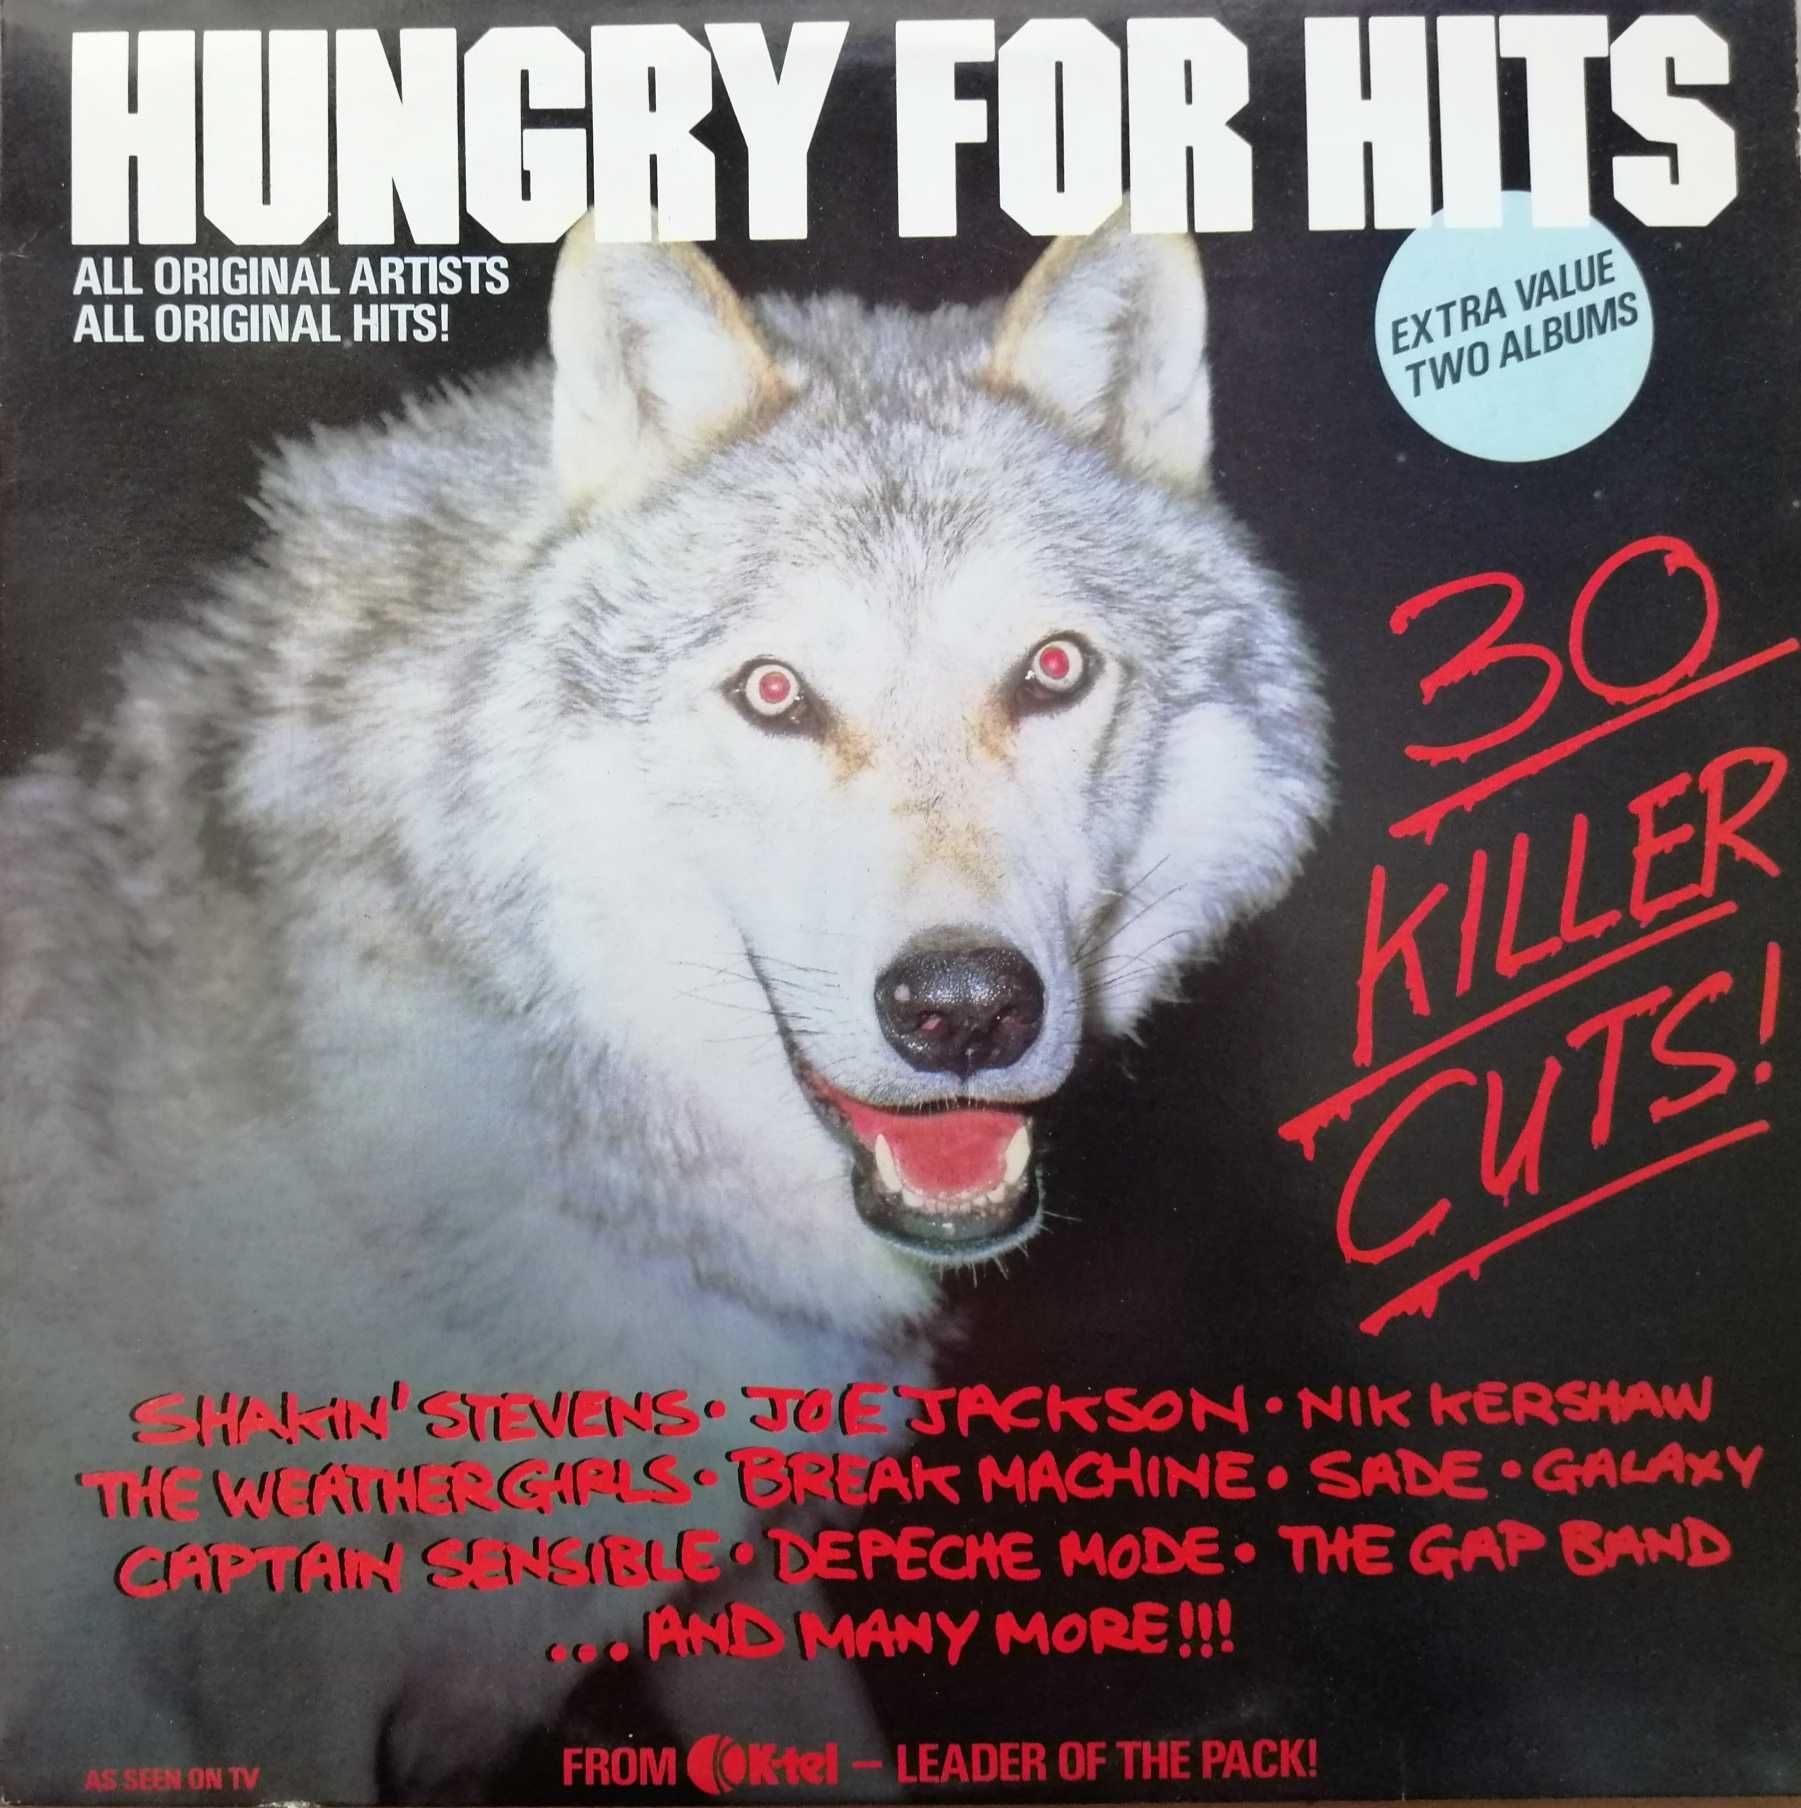 Duplo LP - Hungry For Hits - 30 Killer Cuts! (Ed. K-tel, UK; 1984)